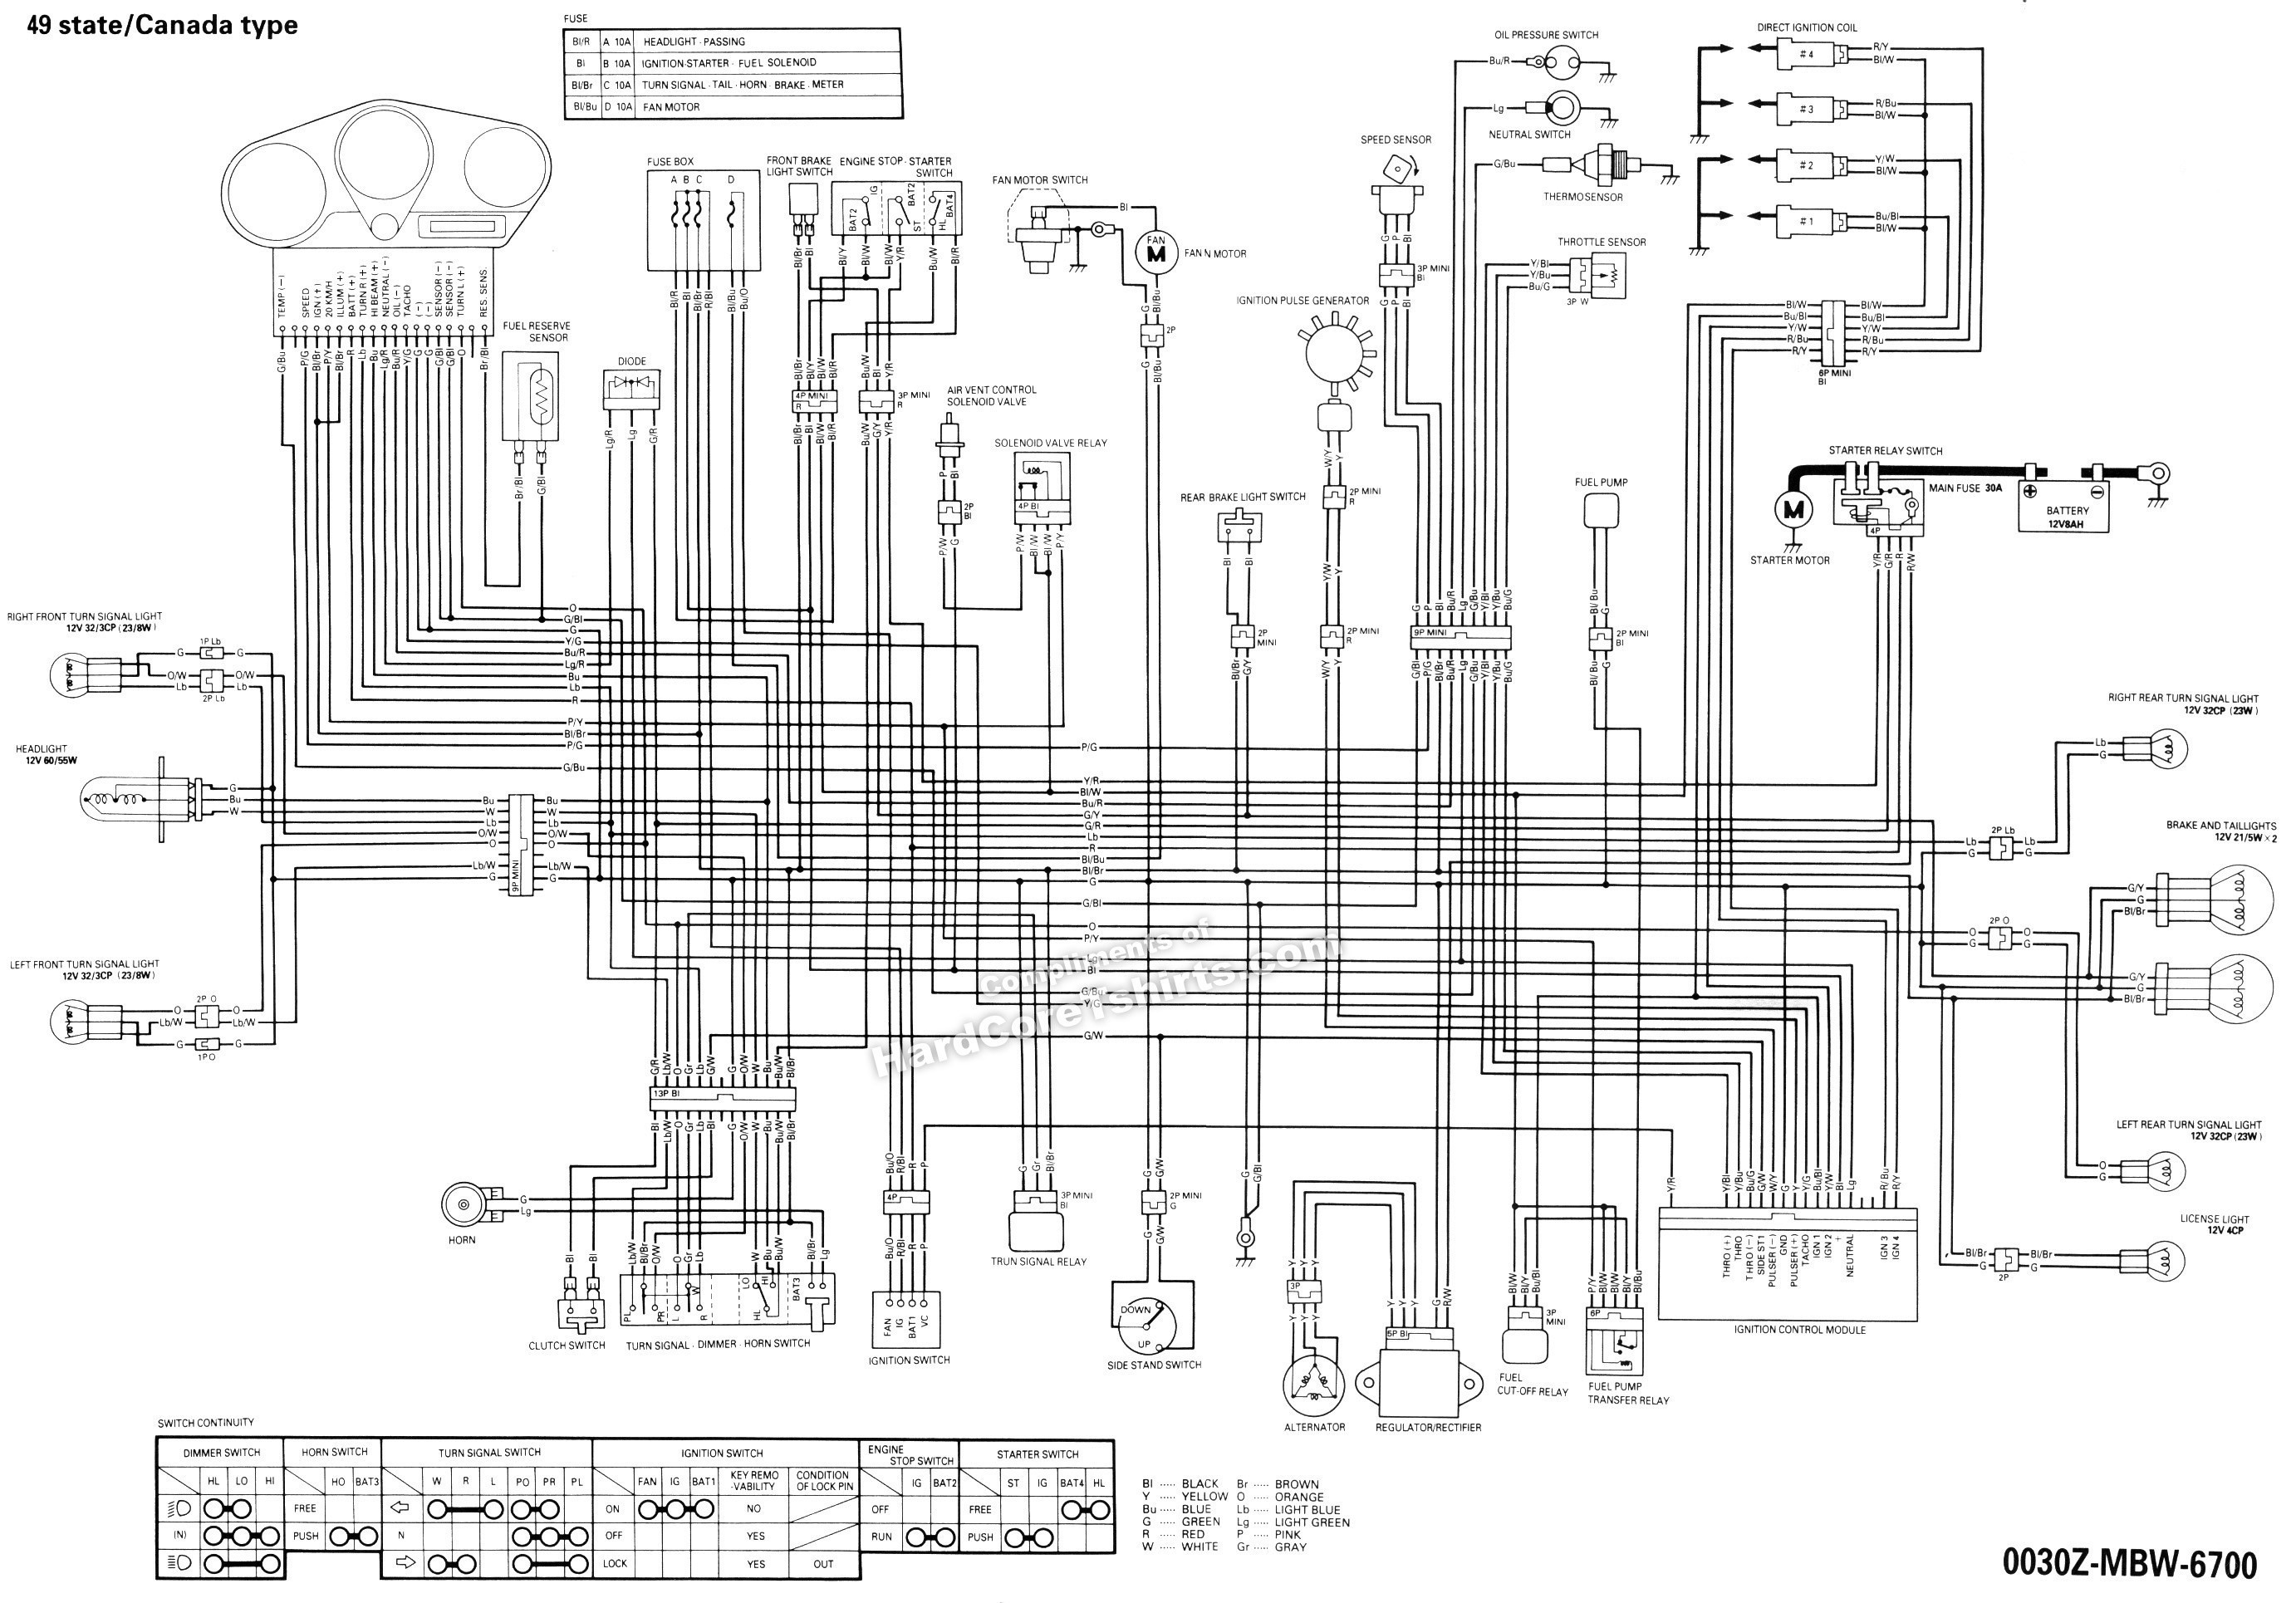 cbr 600 f4 wiring diagram within within cbr 600 f4 wiring diagram rh radixtheme cbr 600 f4 wiring diagram cbr 600 f4 wiring diagram